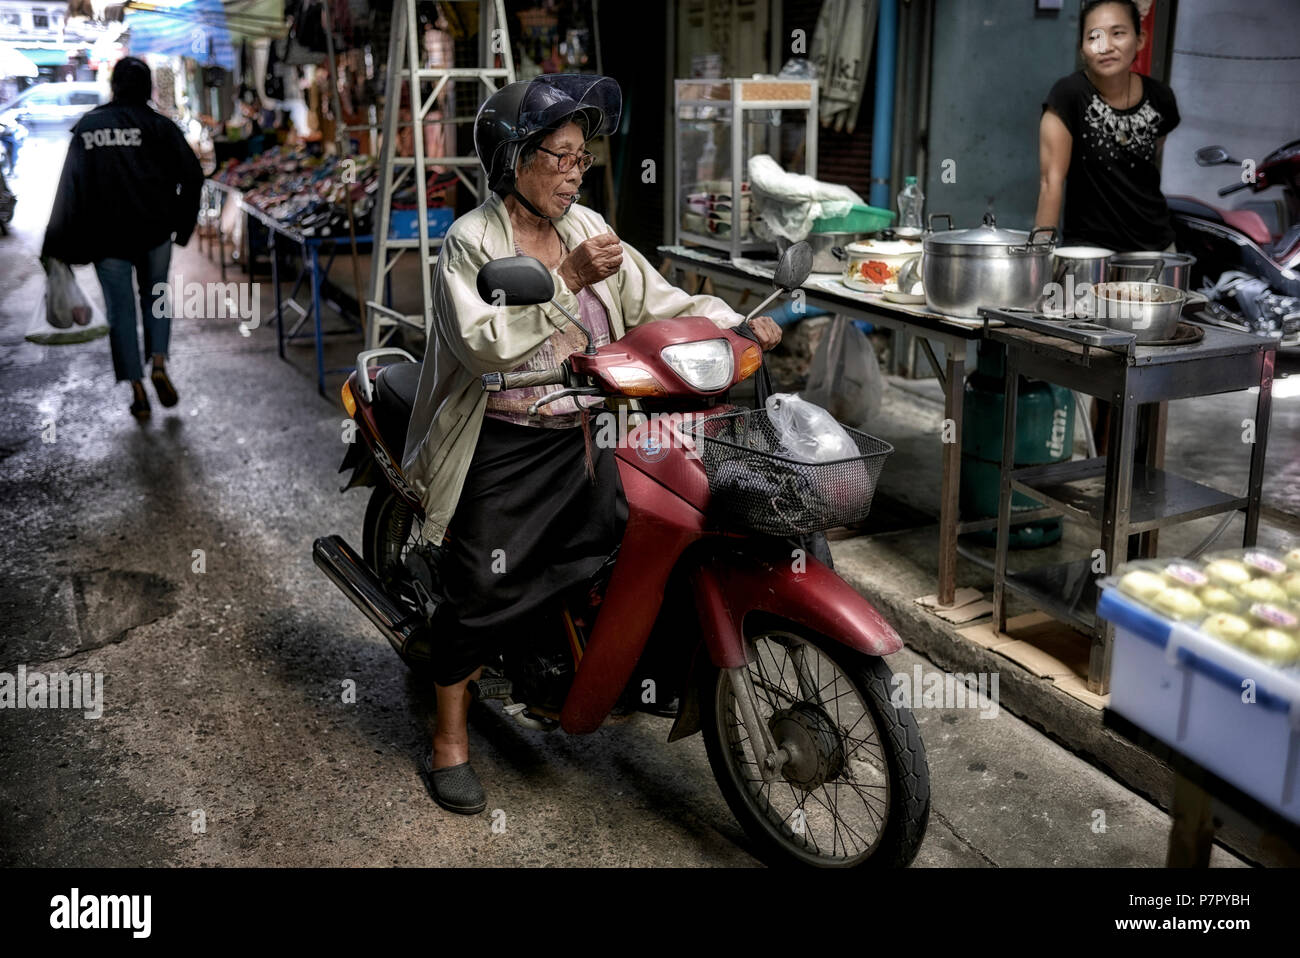 Senior woman riding a motorcycle Thailand street scene Stock Photo